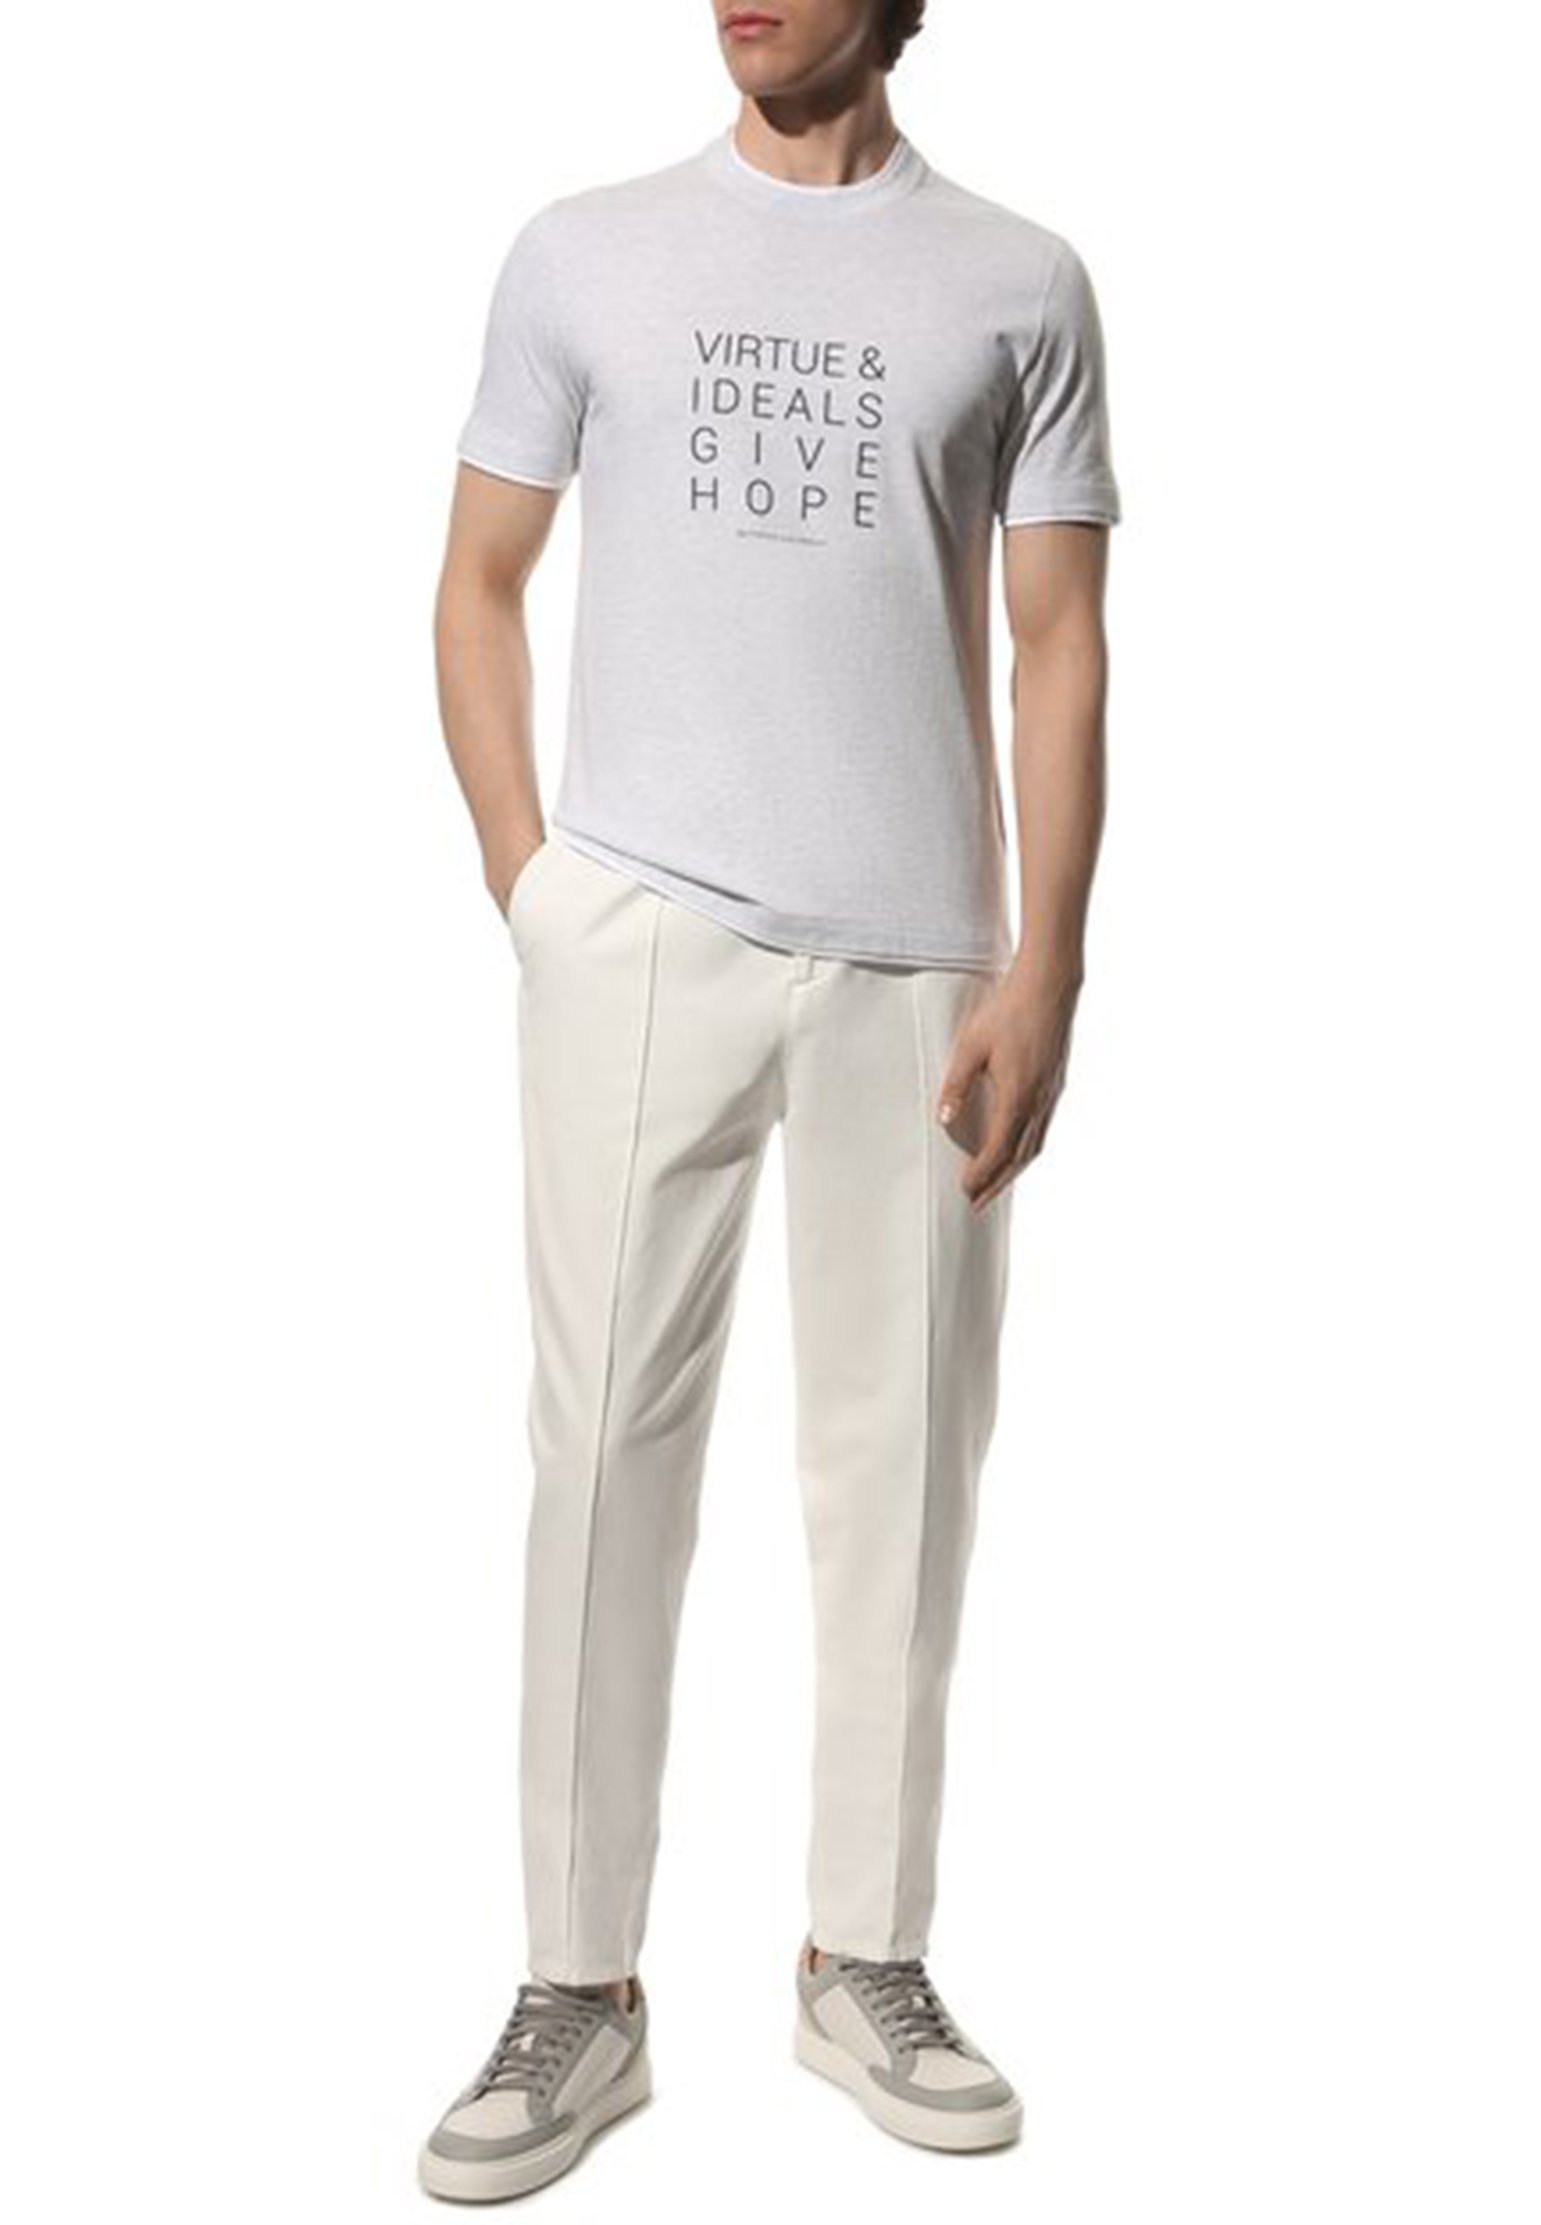 T-Shirt BRUNELLO CUCINELLI Color: light grey (Code: 483) in online store Allure